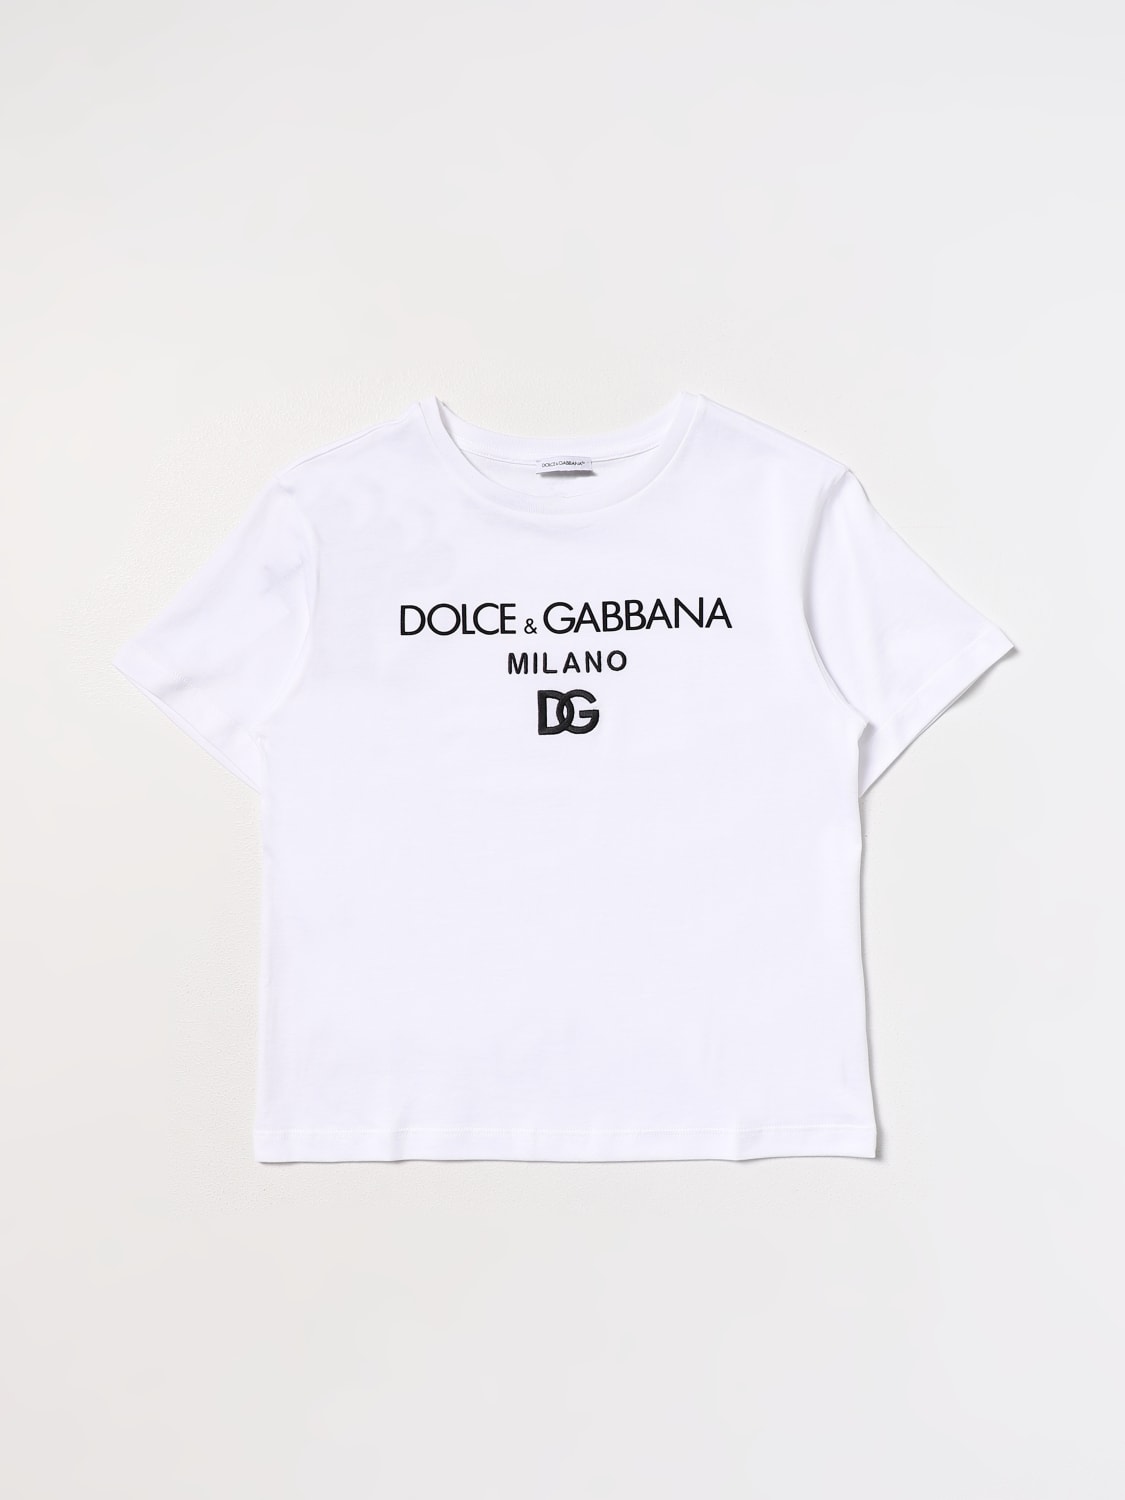 DOLCE \u0026 GABBANA Tシャツ…(定価の半額)